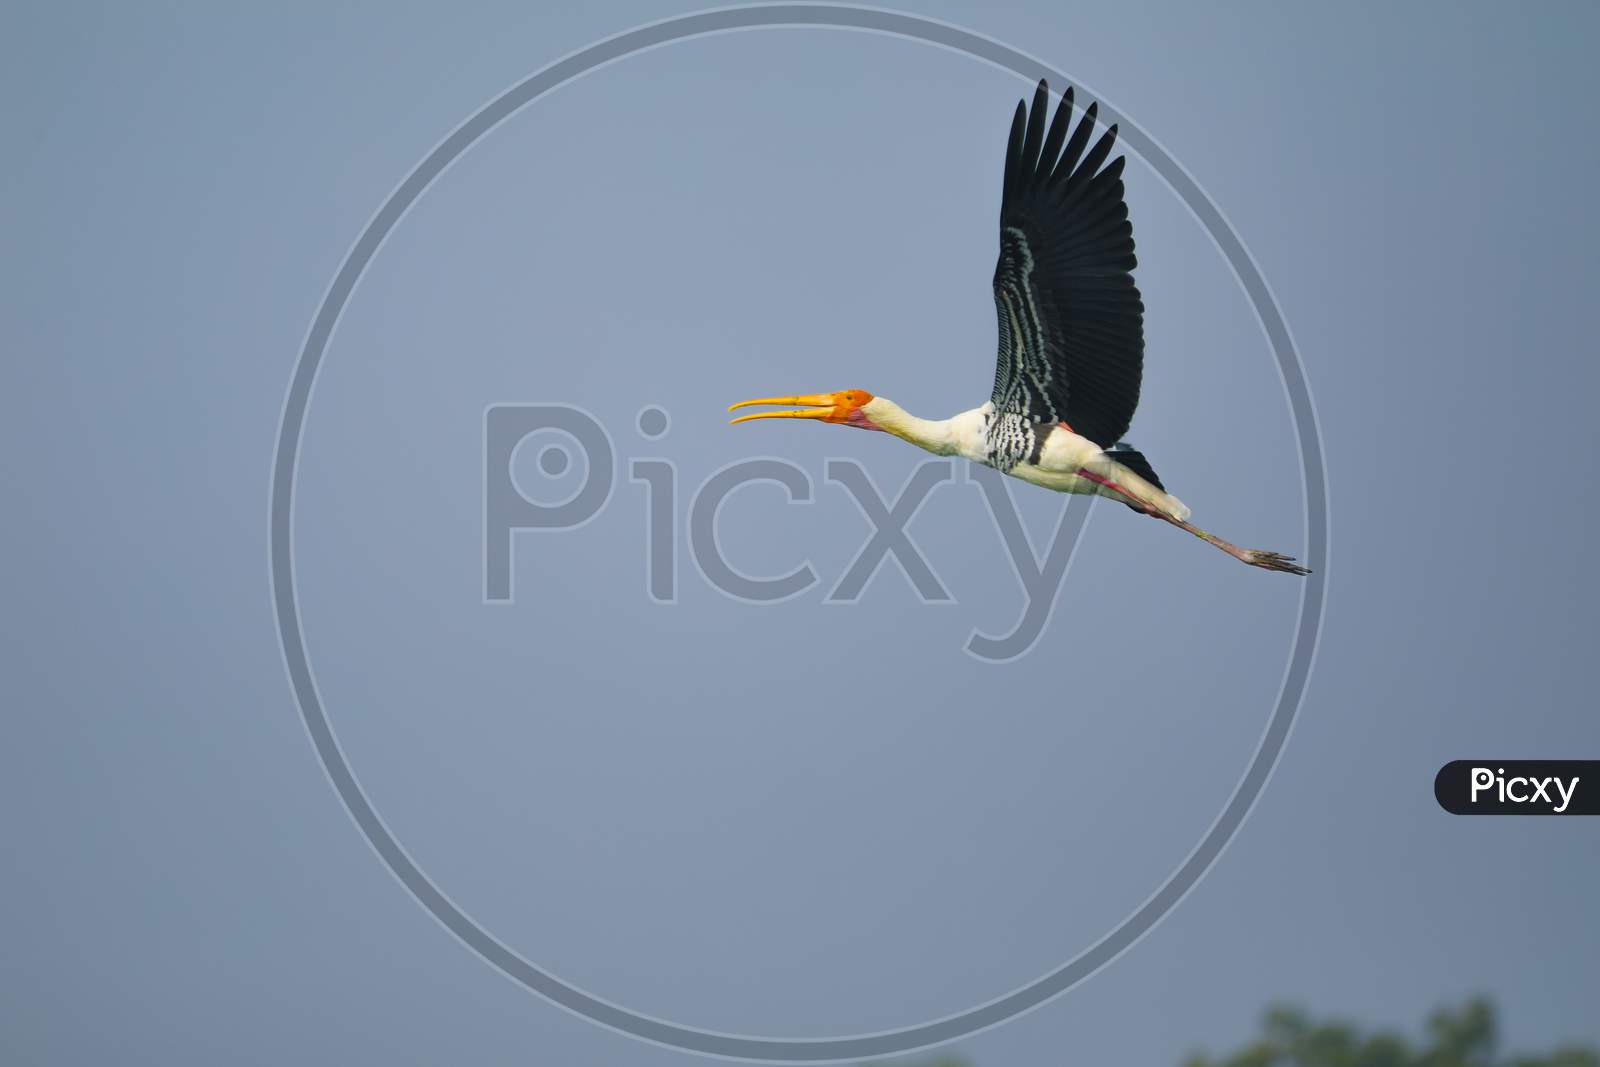 Yellow-billed stork flying